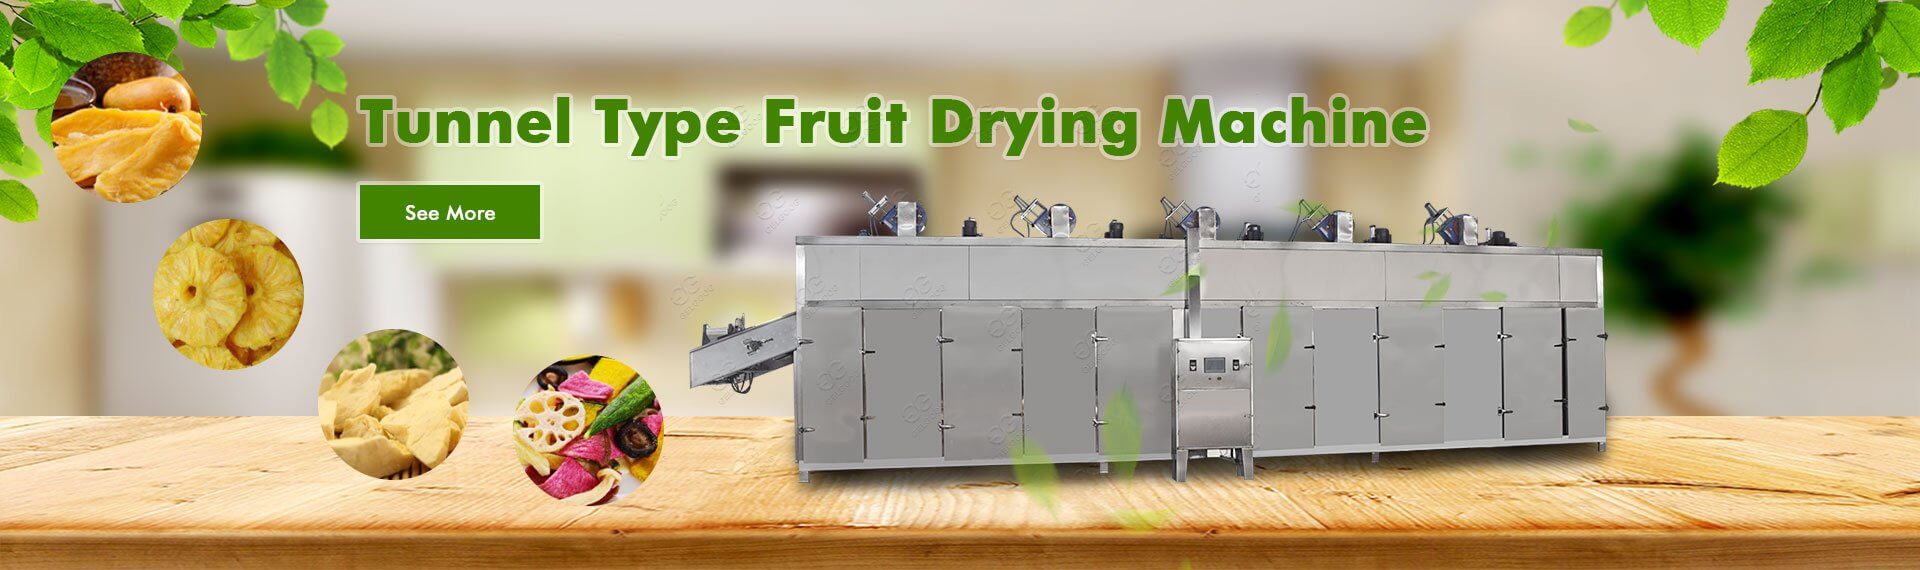 Tunnel Type Fruit Drying Machine